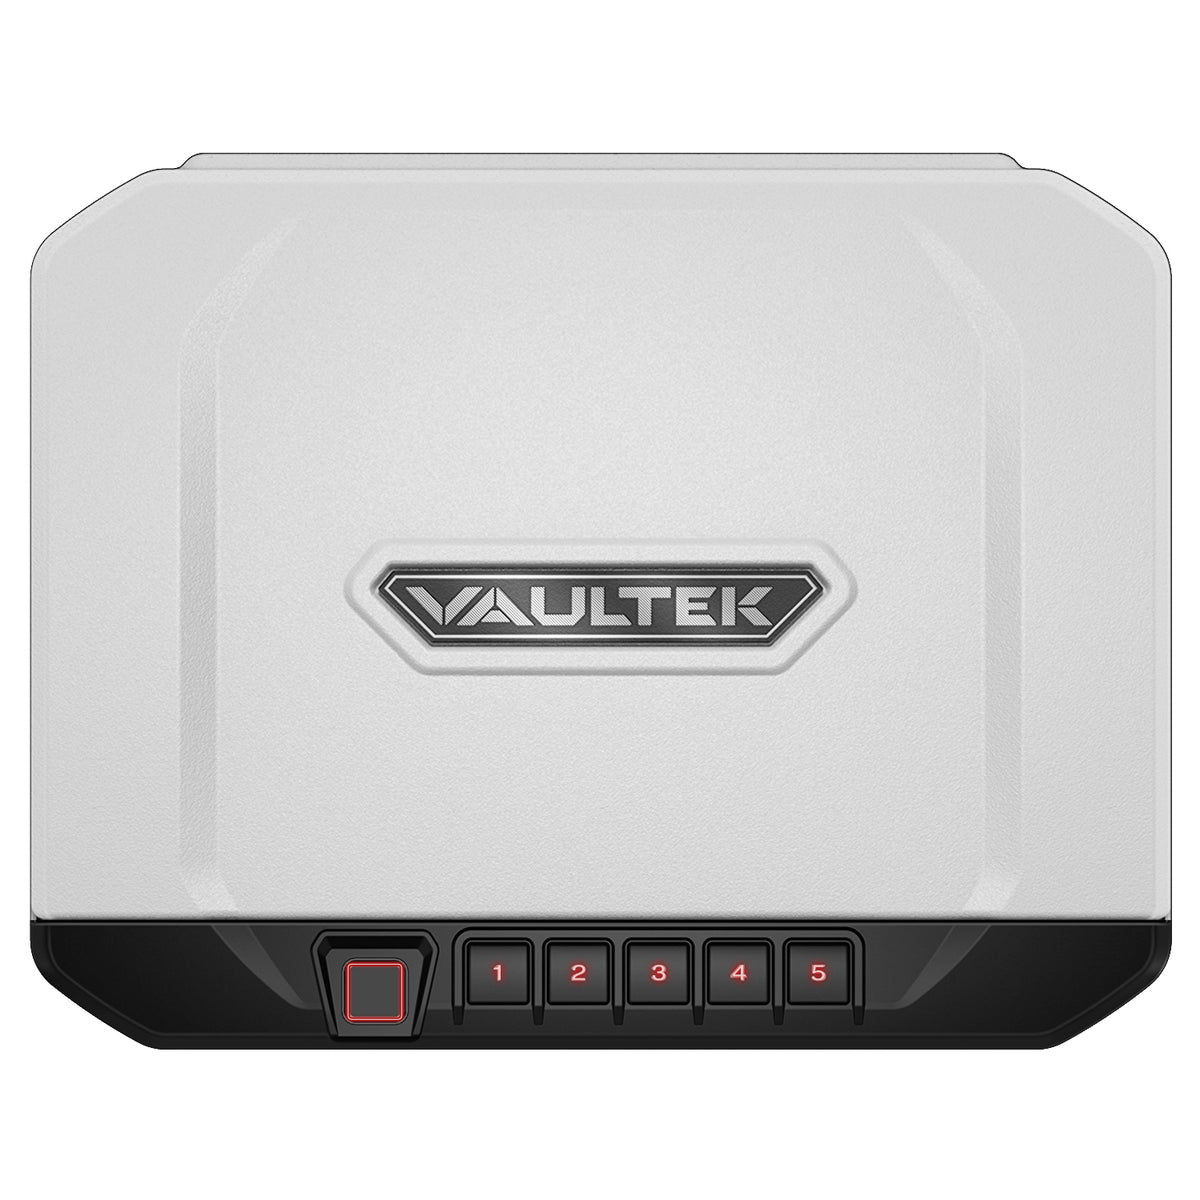 Vaultek - 20 Series VS20i Compact Bluetooth and Biometric Gun Safe